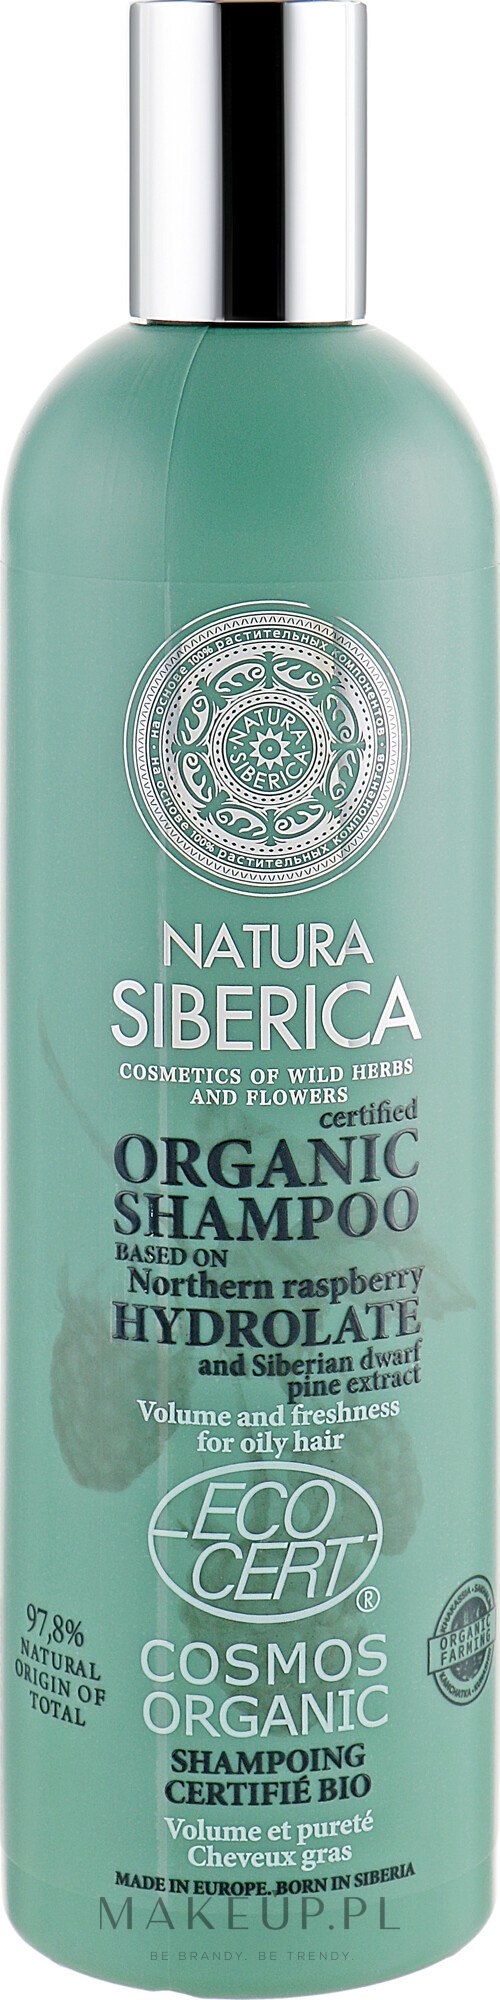 szampon natura